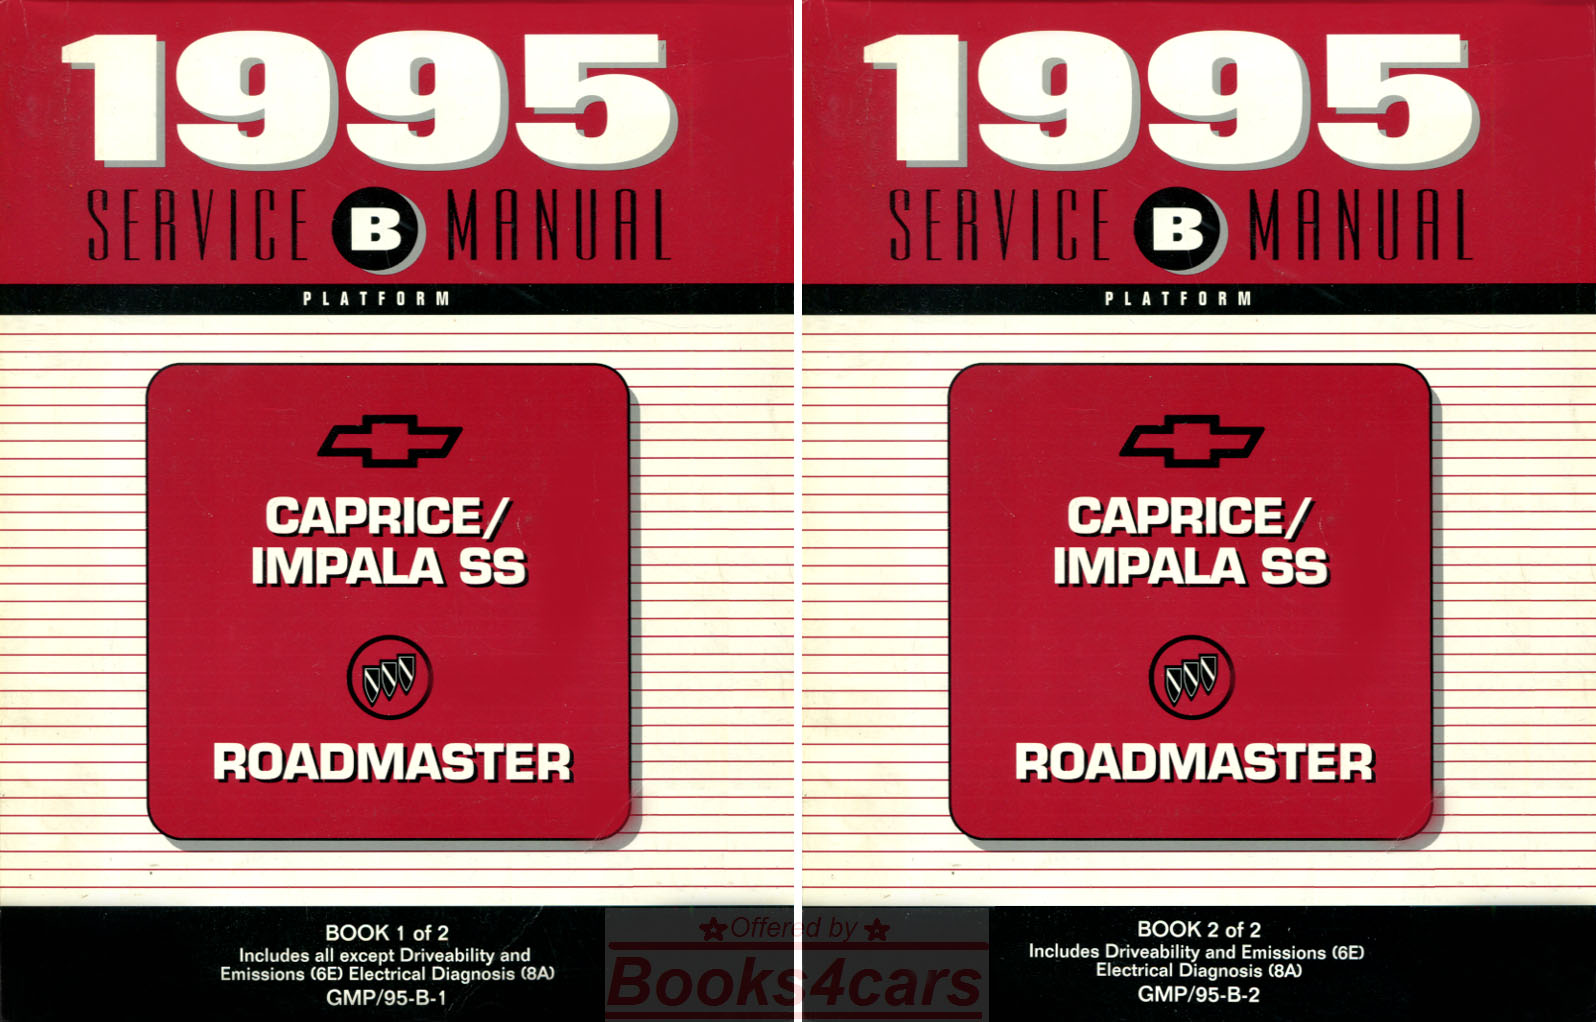 95 Impala SS Caprice Roadmaster Multi Volume Shop Service Repair Manual set by Chevrolet & Buick